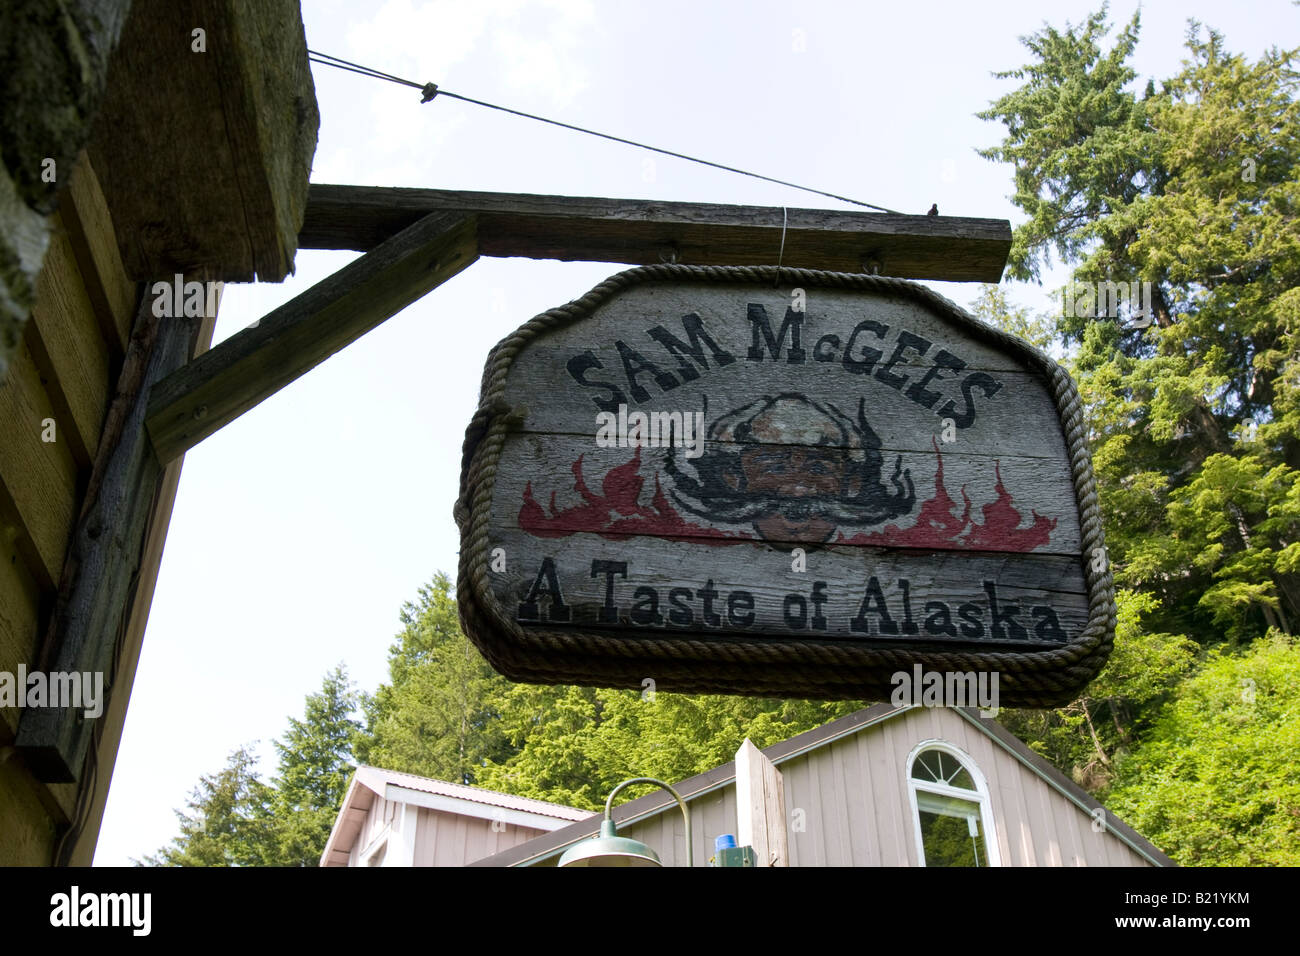 Sam McGee - un assaggio di Alaska - magazzino su 18 Creek street in Ketchikan, Alaska. Foto Stock